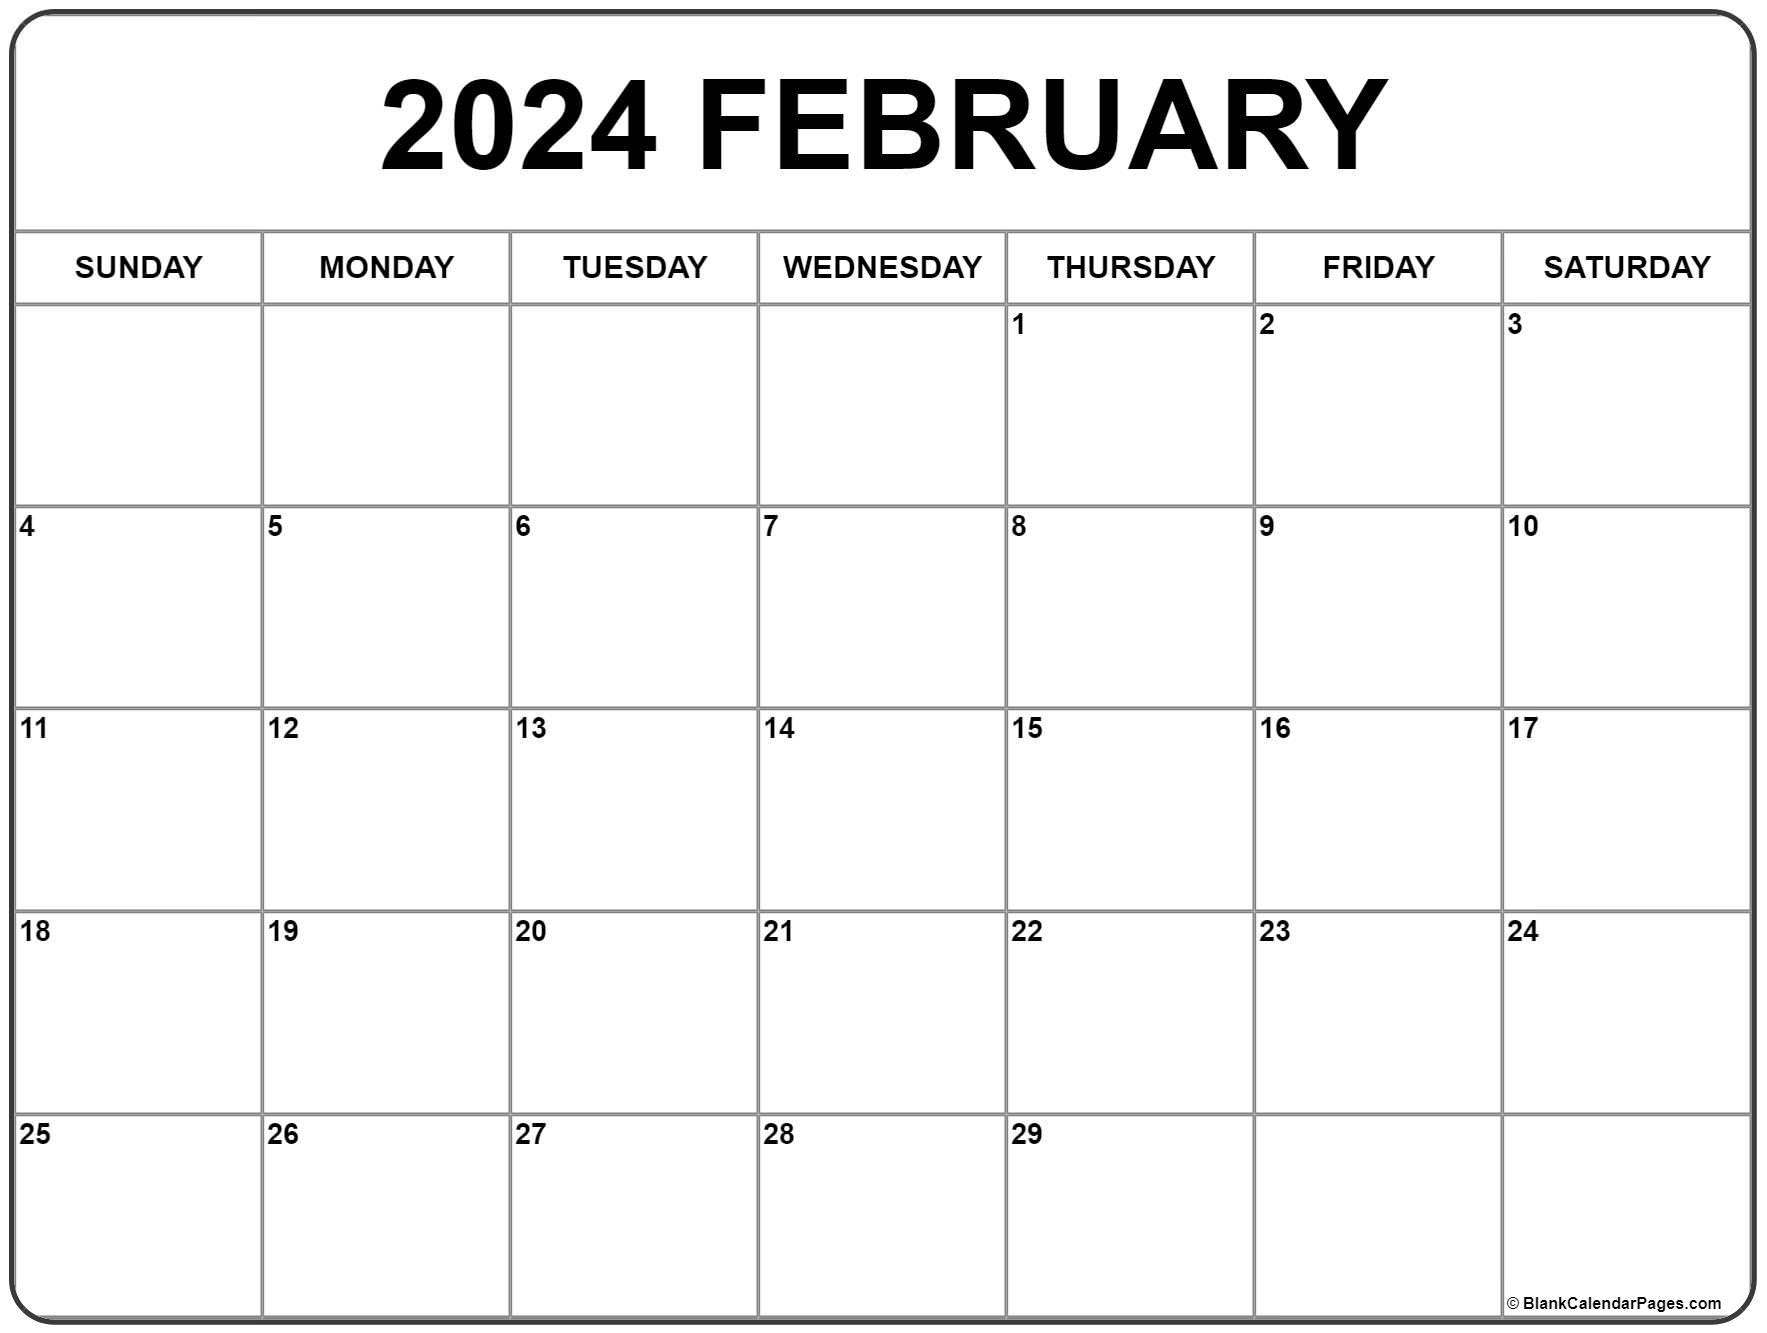 February 2024 Blank Calendar Printable Free Dacy Michel